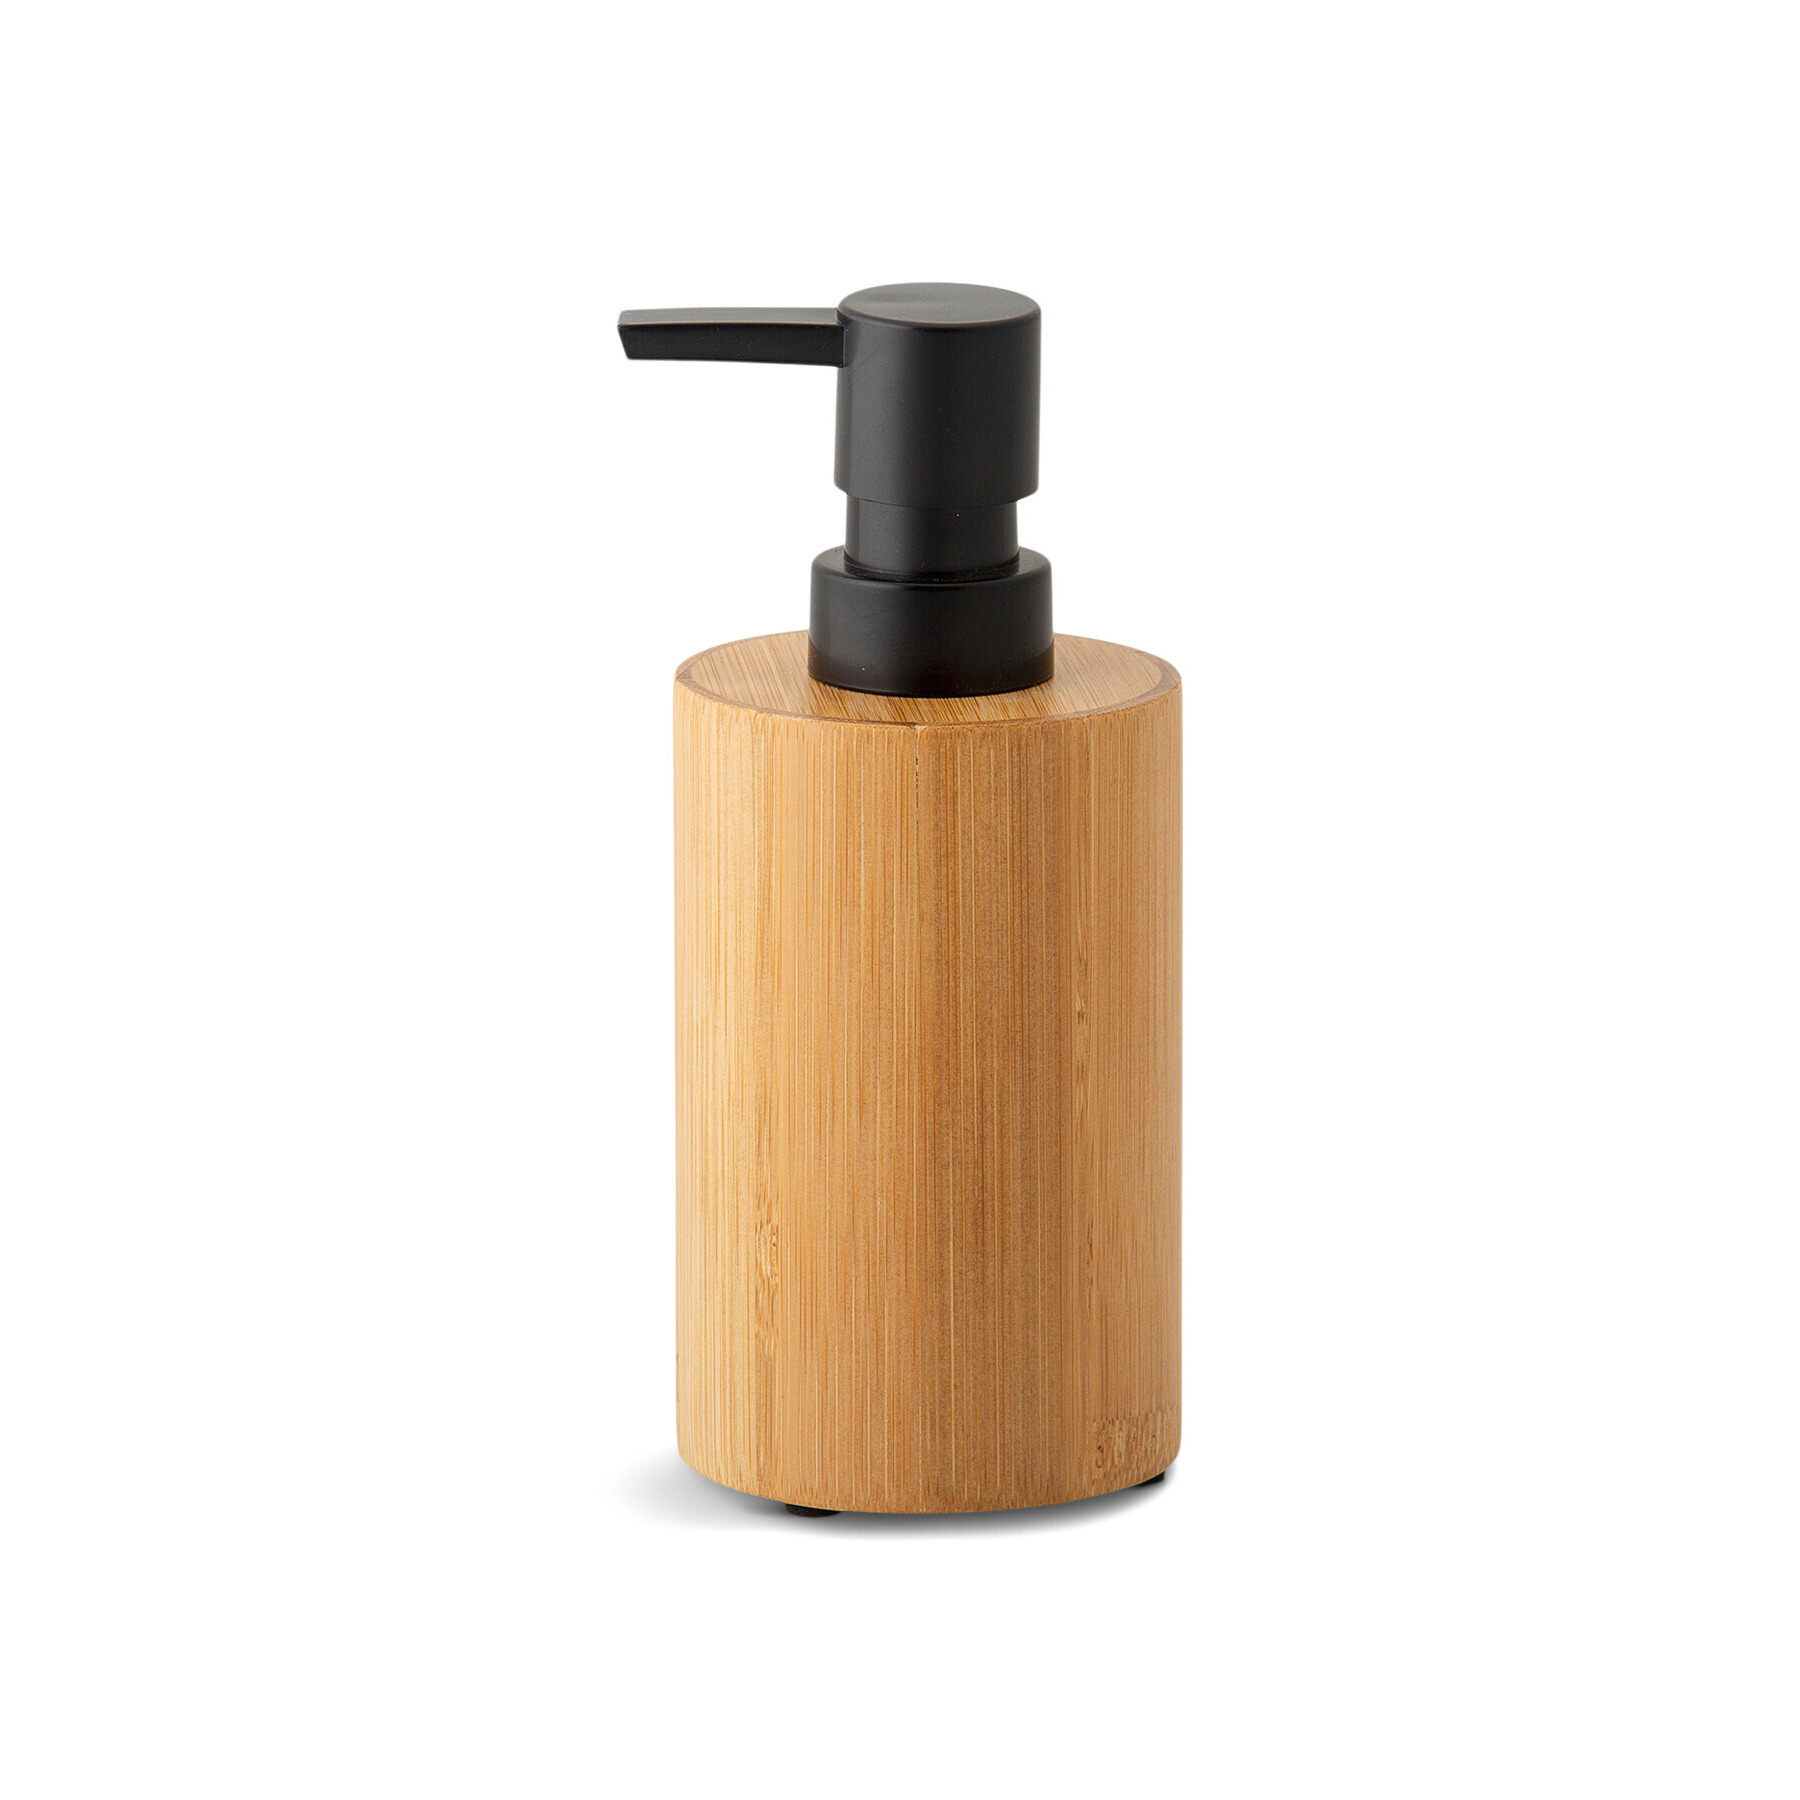 Andrea House Bamboo Soap Dispenser - image 1